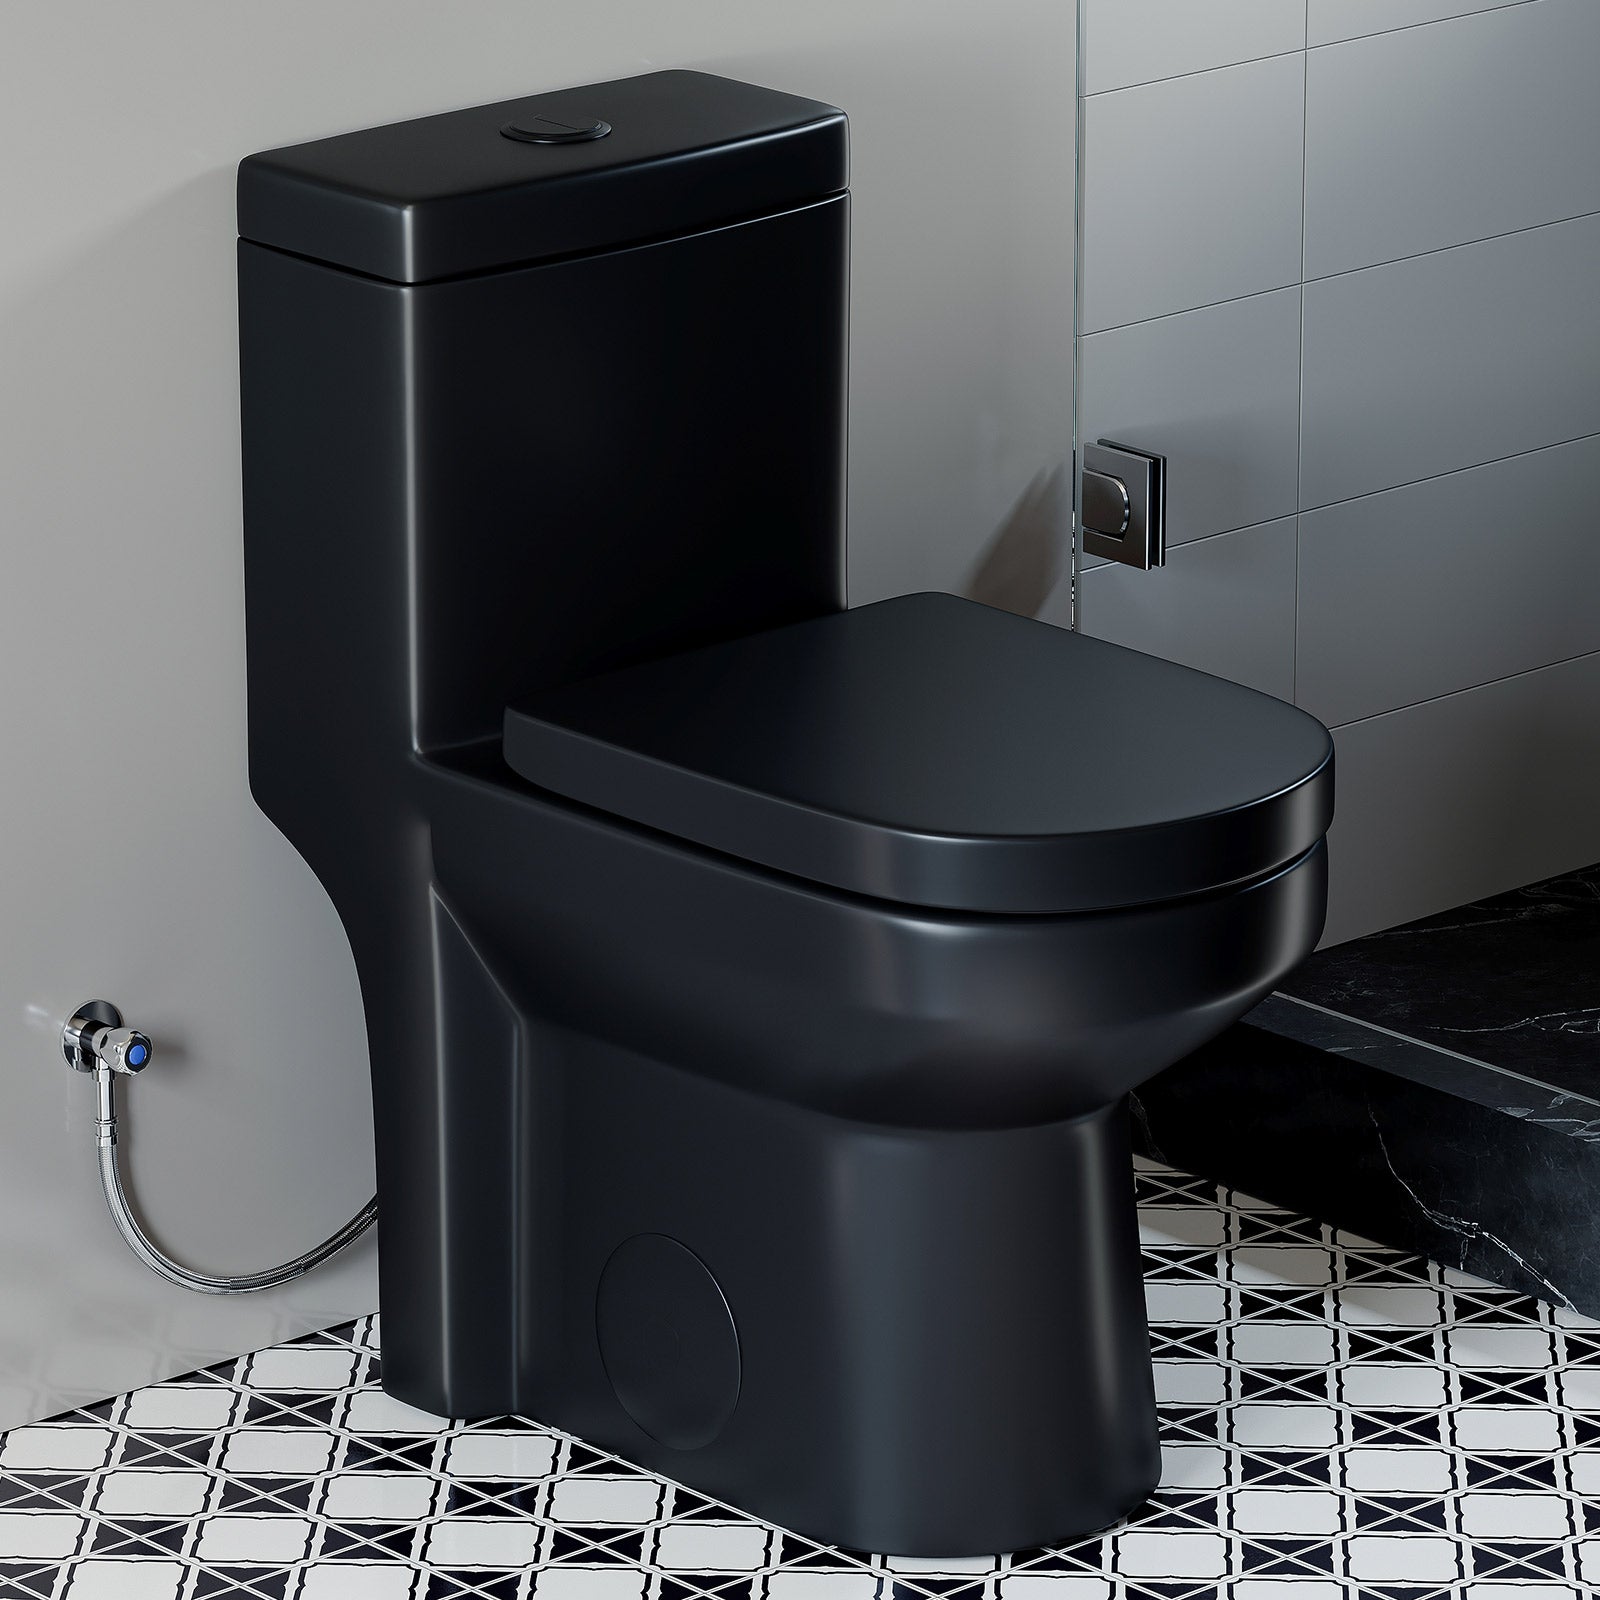 HOROW HWMT 8733 12 Inch Small Black Toilet One Piece Dual Flush Toilet Model 8733B